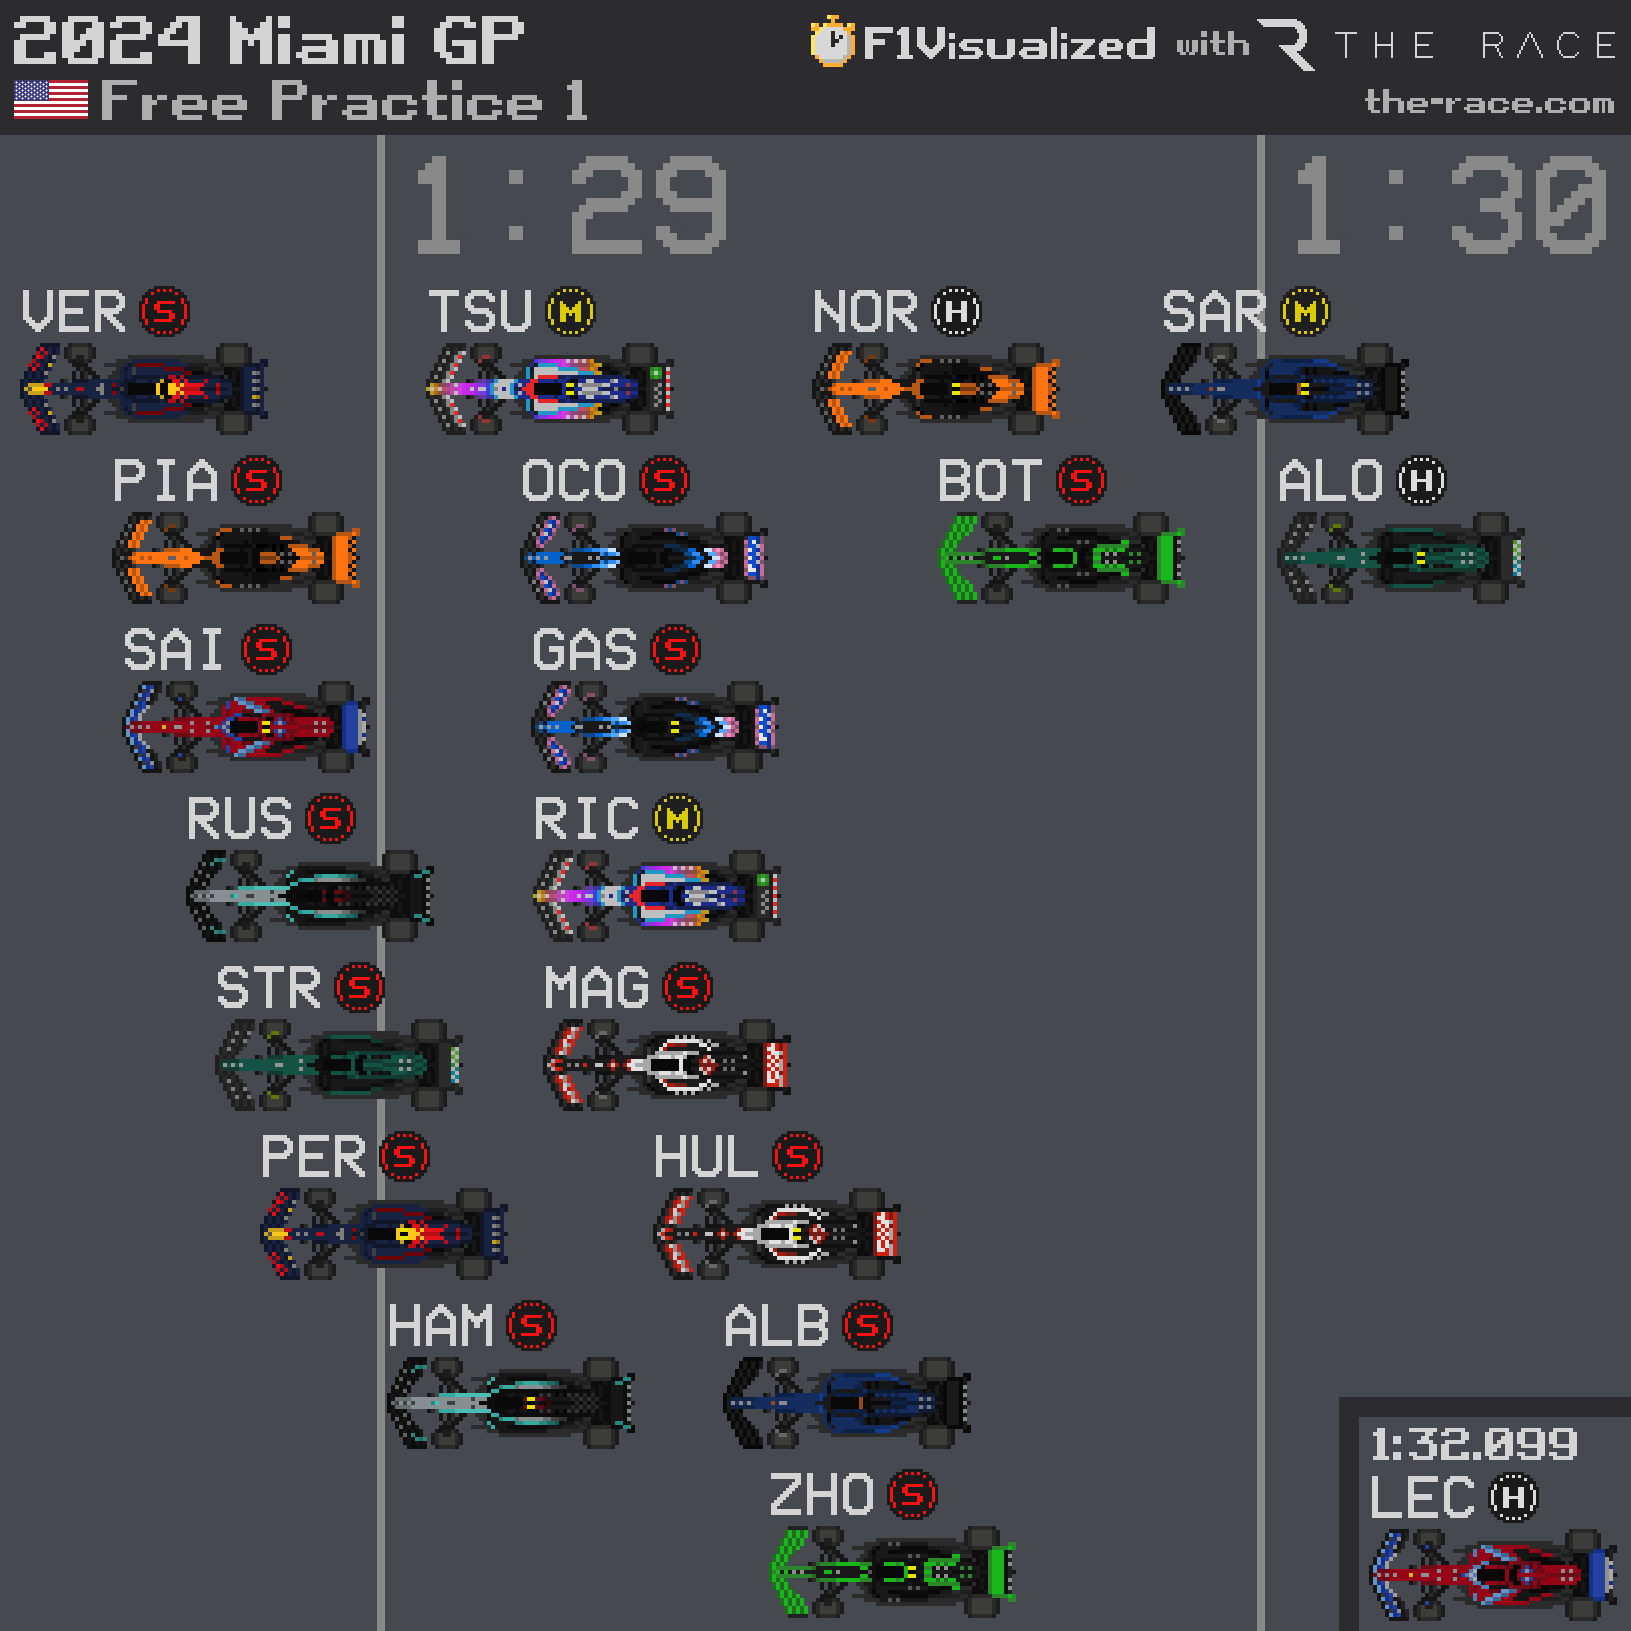 Miami GP practice results